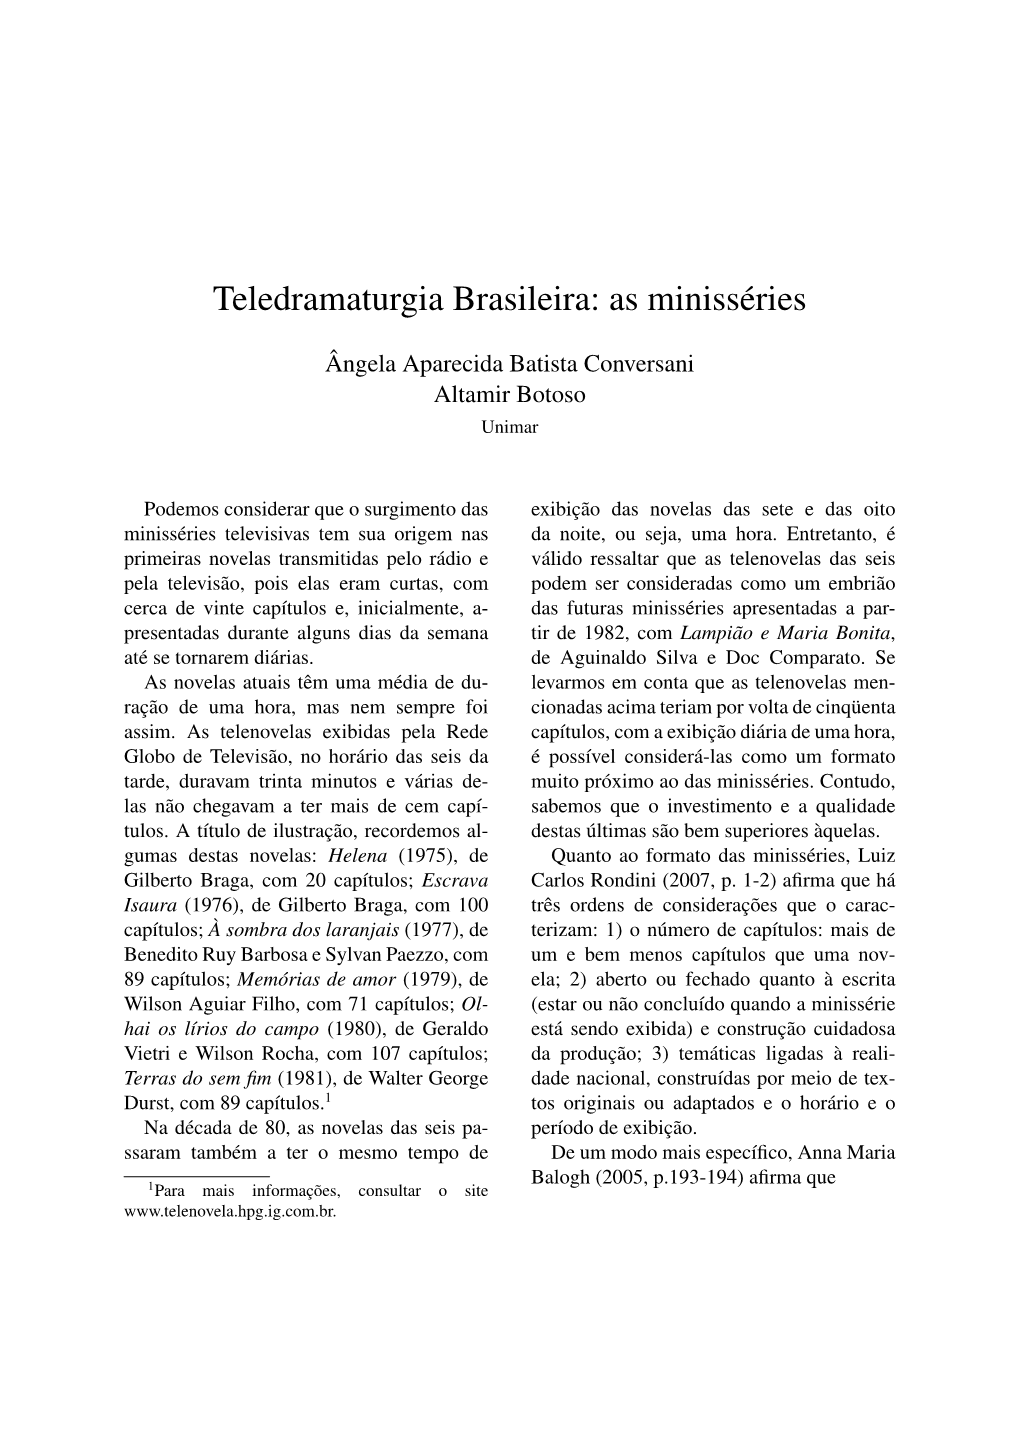 Teledramaturgia Brasileira: As Minisséries